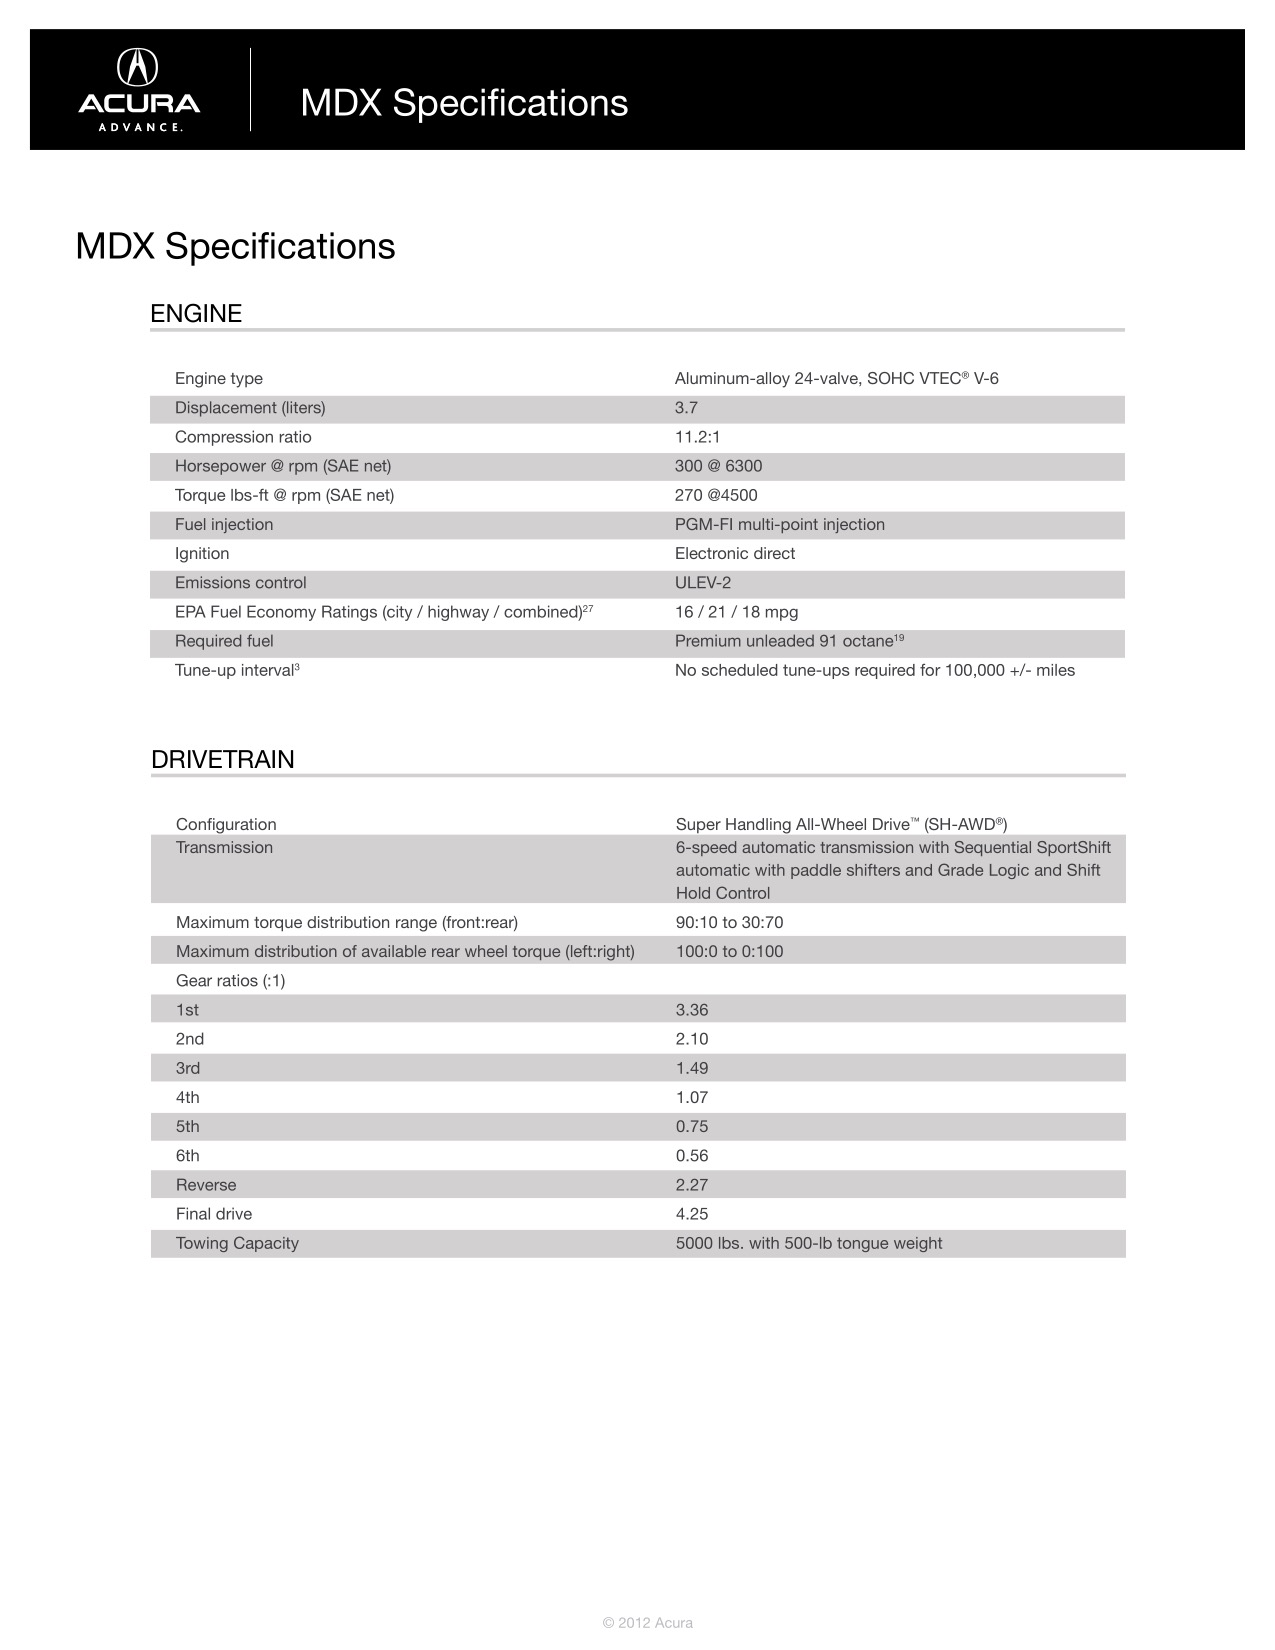 2013 Acura MDX Brochure Page 9